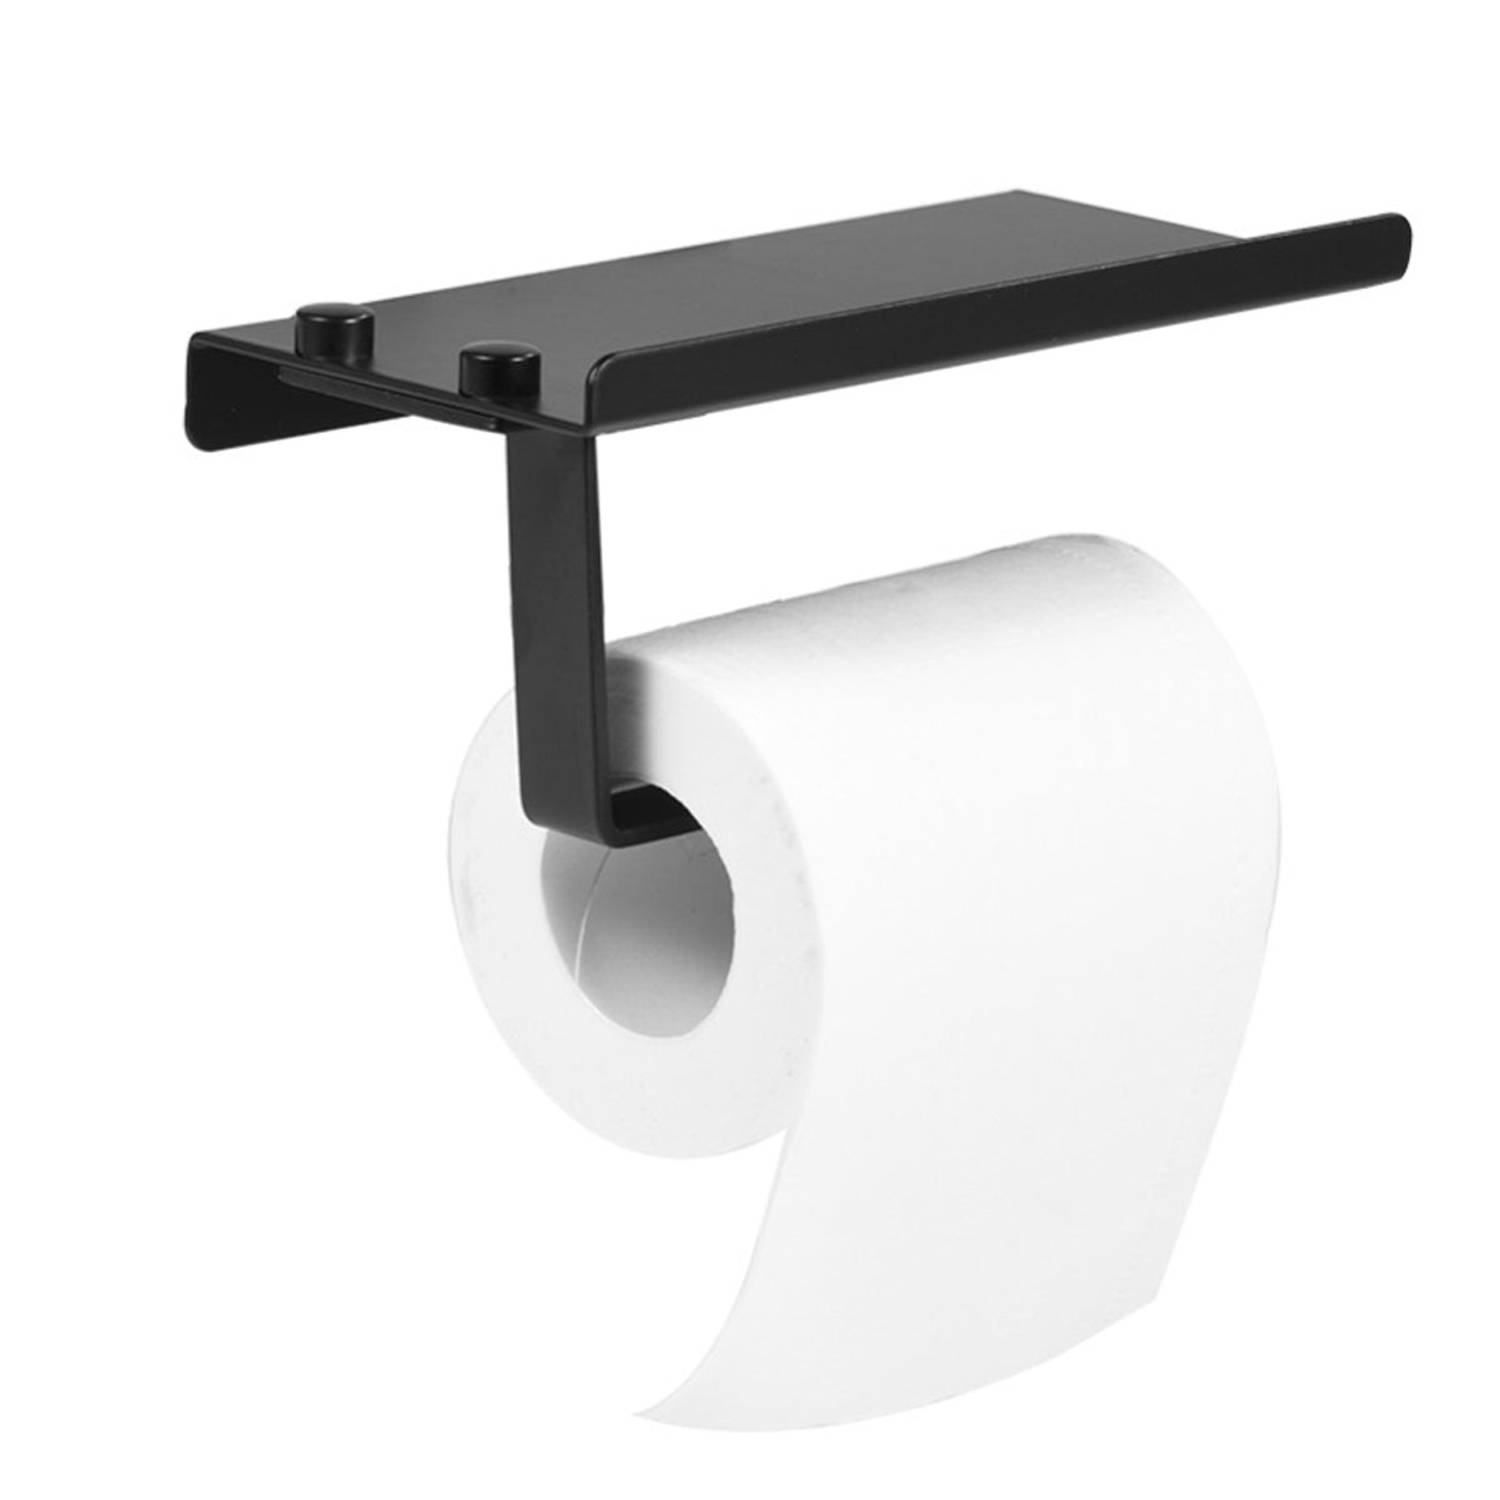 Toiletrolhouder met smartphone plankje - Zwart - rolhouder | Blokker